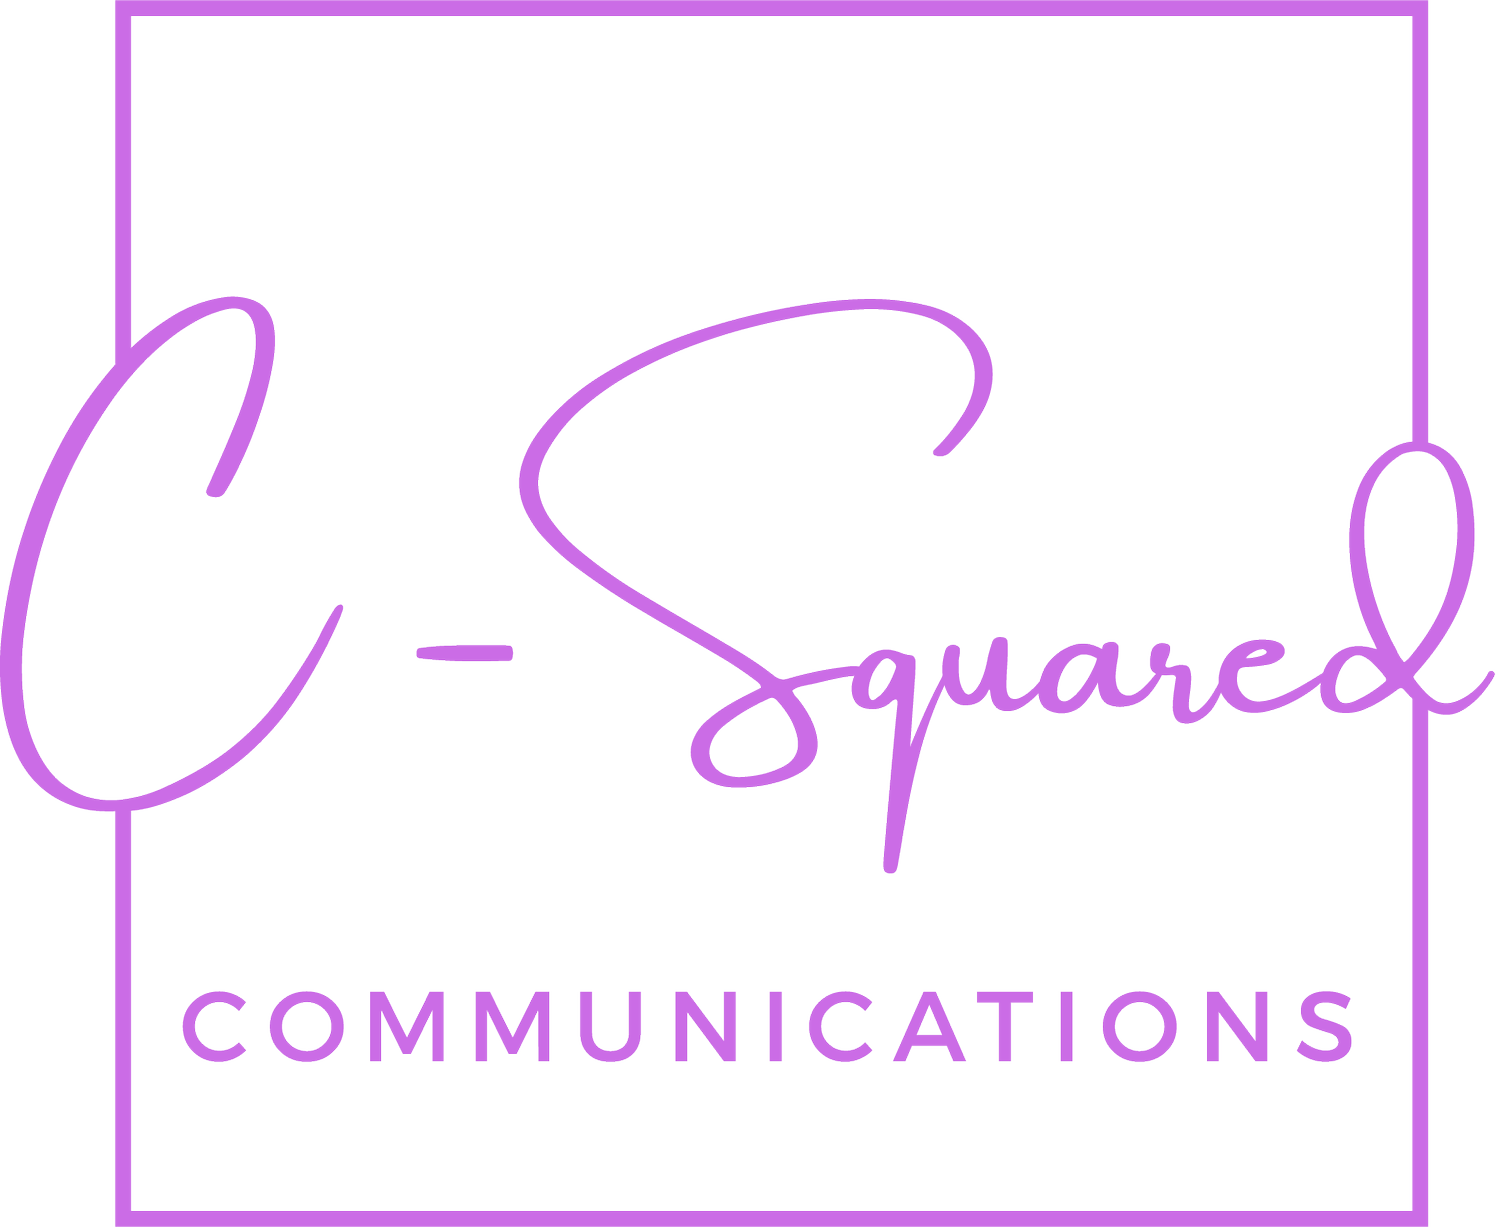 C-Squared Communications